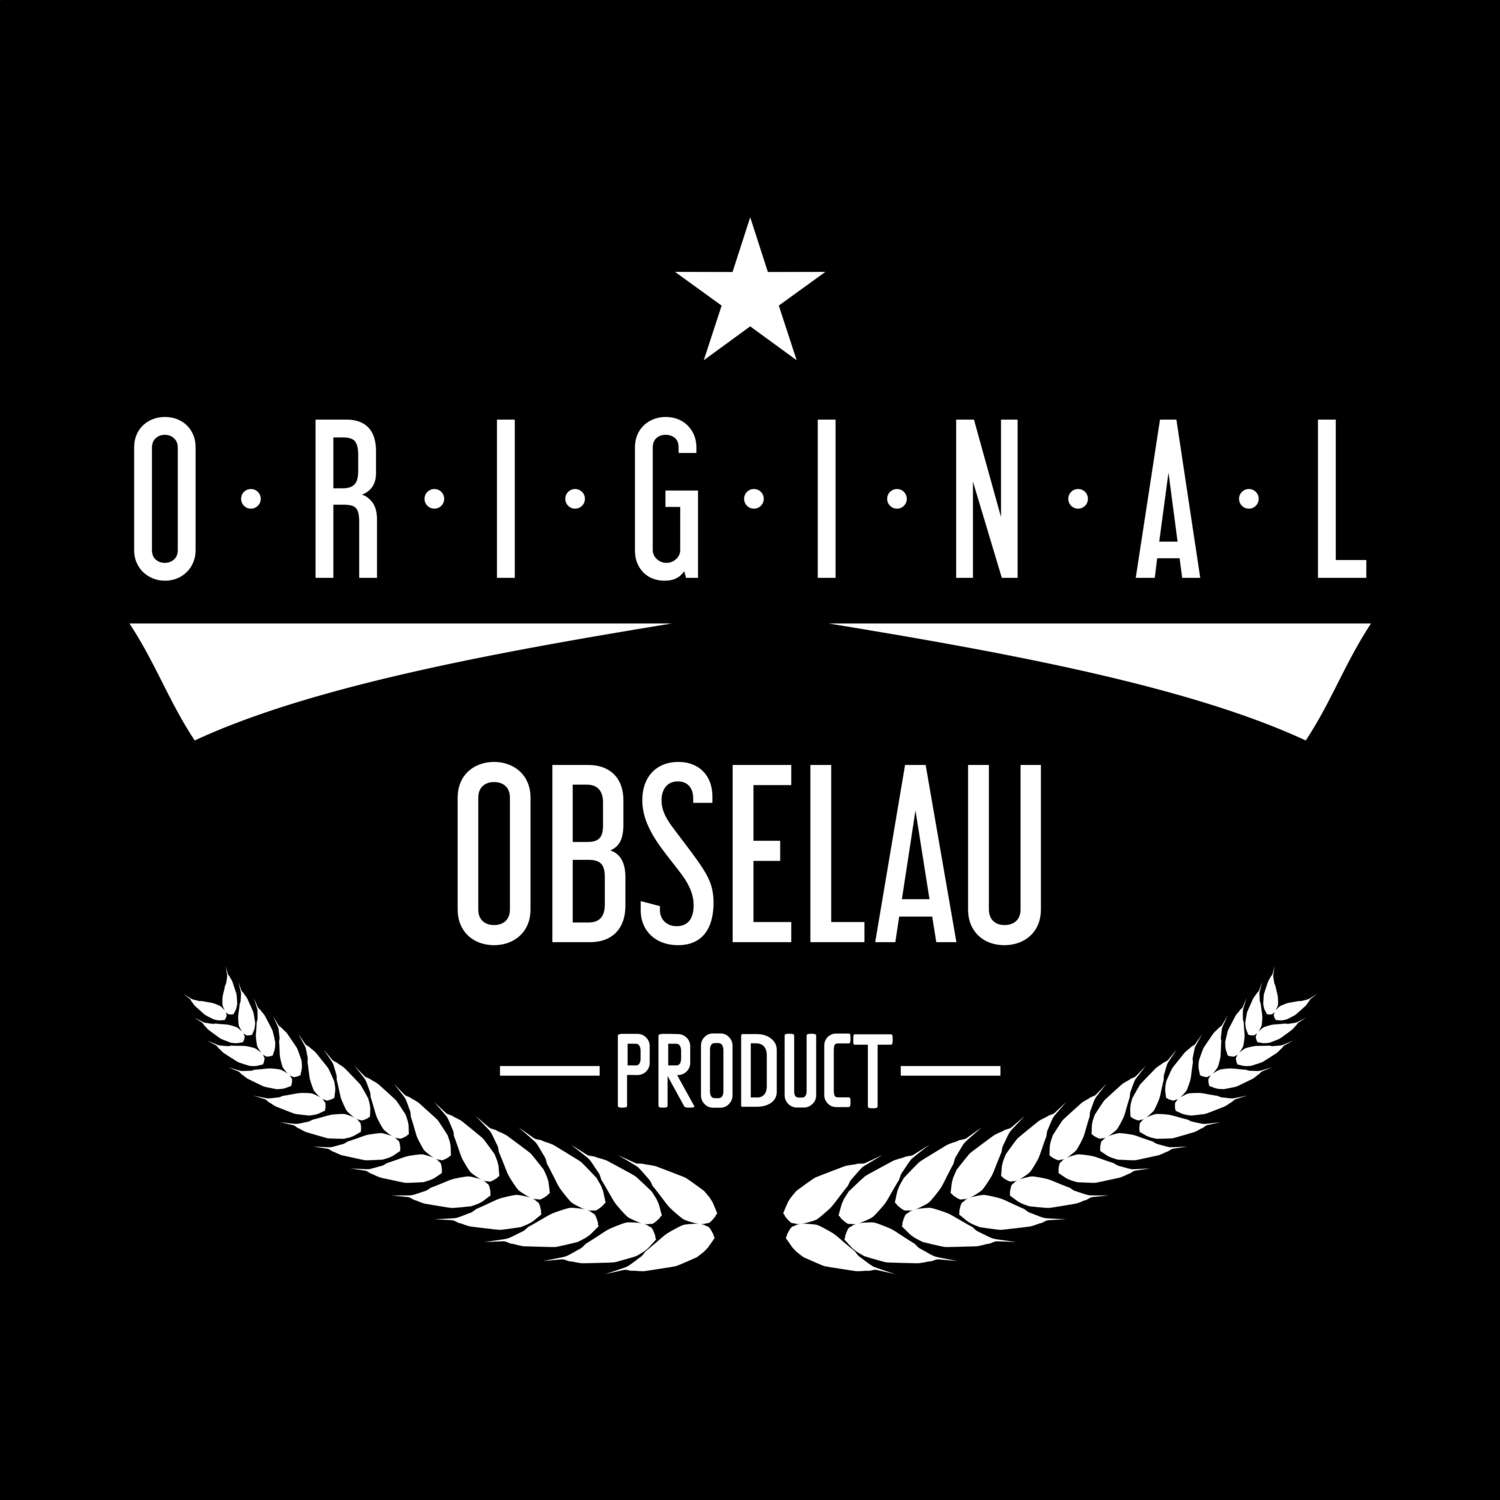 Obselau T-Shirt »Original Product«